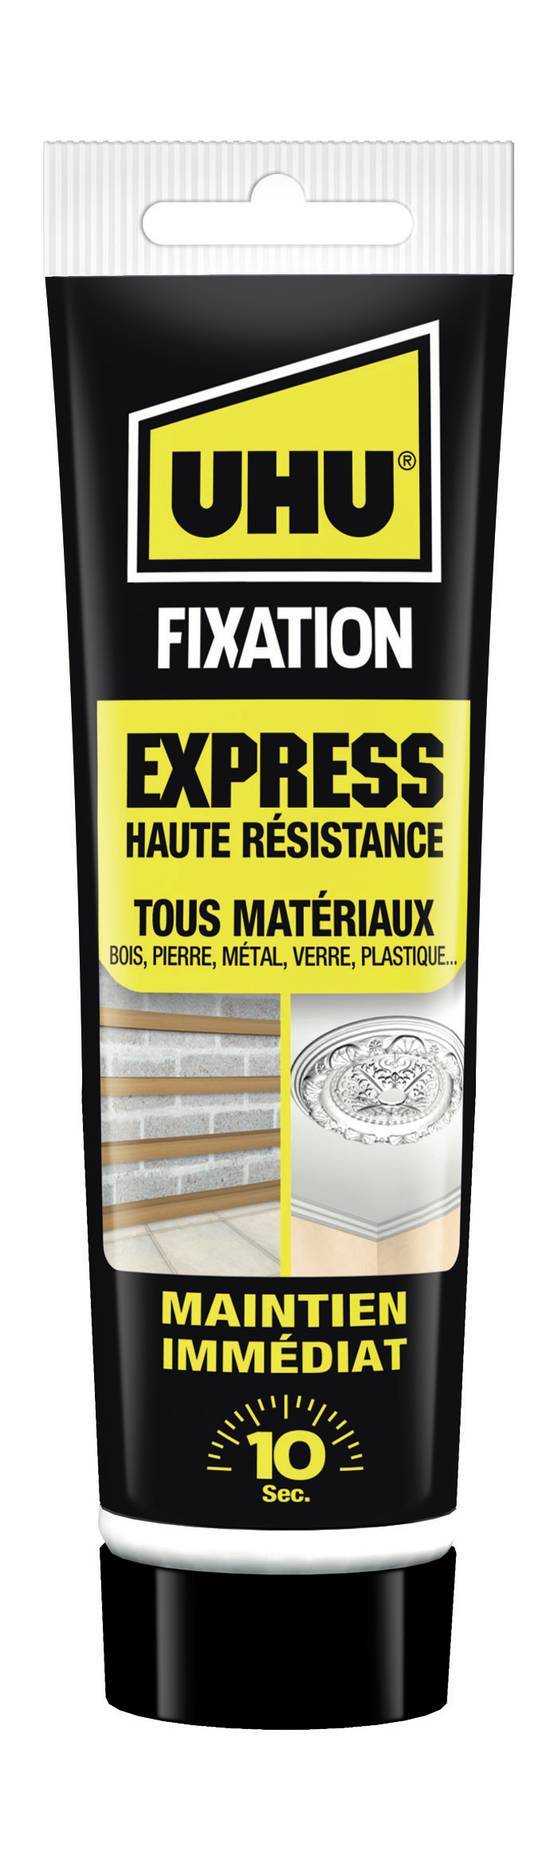 Fixation express blanc tube 175g